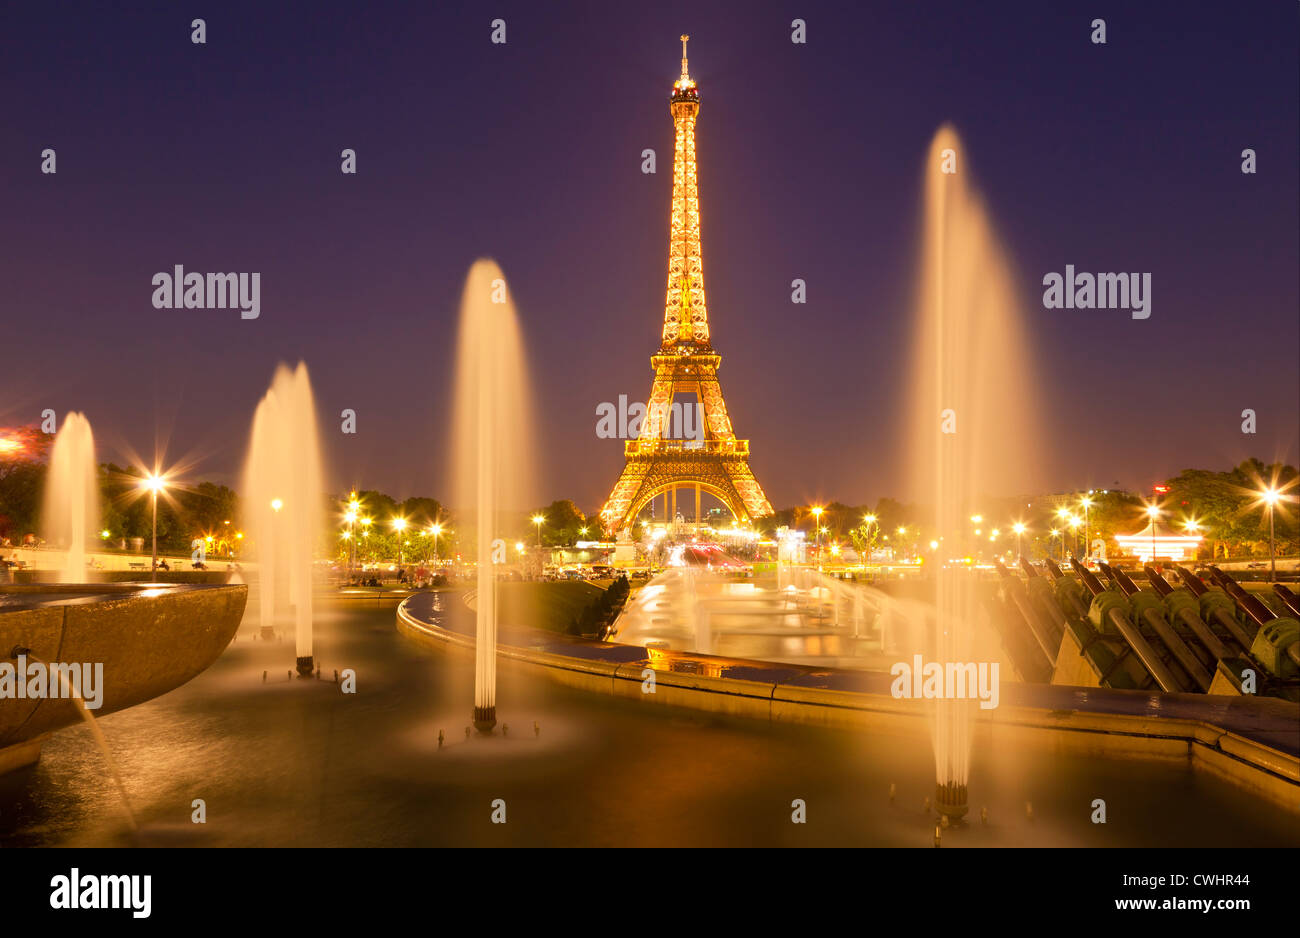 Fontaines de Chaillot, Eiffelturm Skyline von Paris Frankreich EU Europa Eiffelturm mit Trocadero-Brunnen bei Nacht Skyline von Paris Frankreich EU Europa Stockfoto